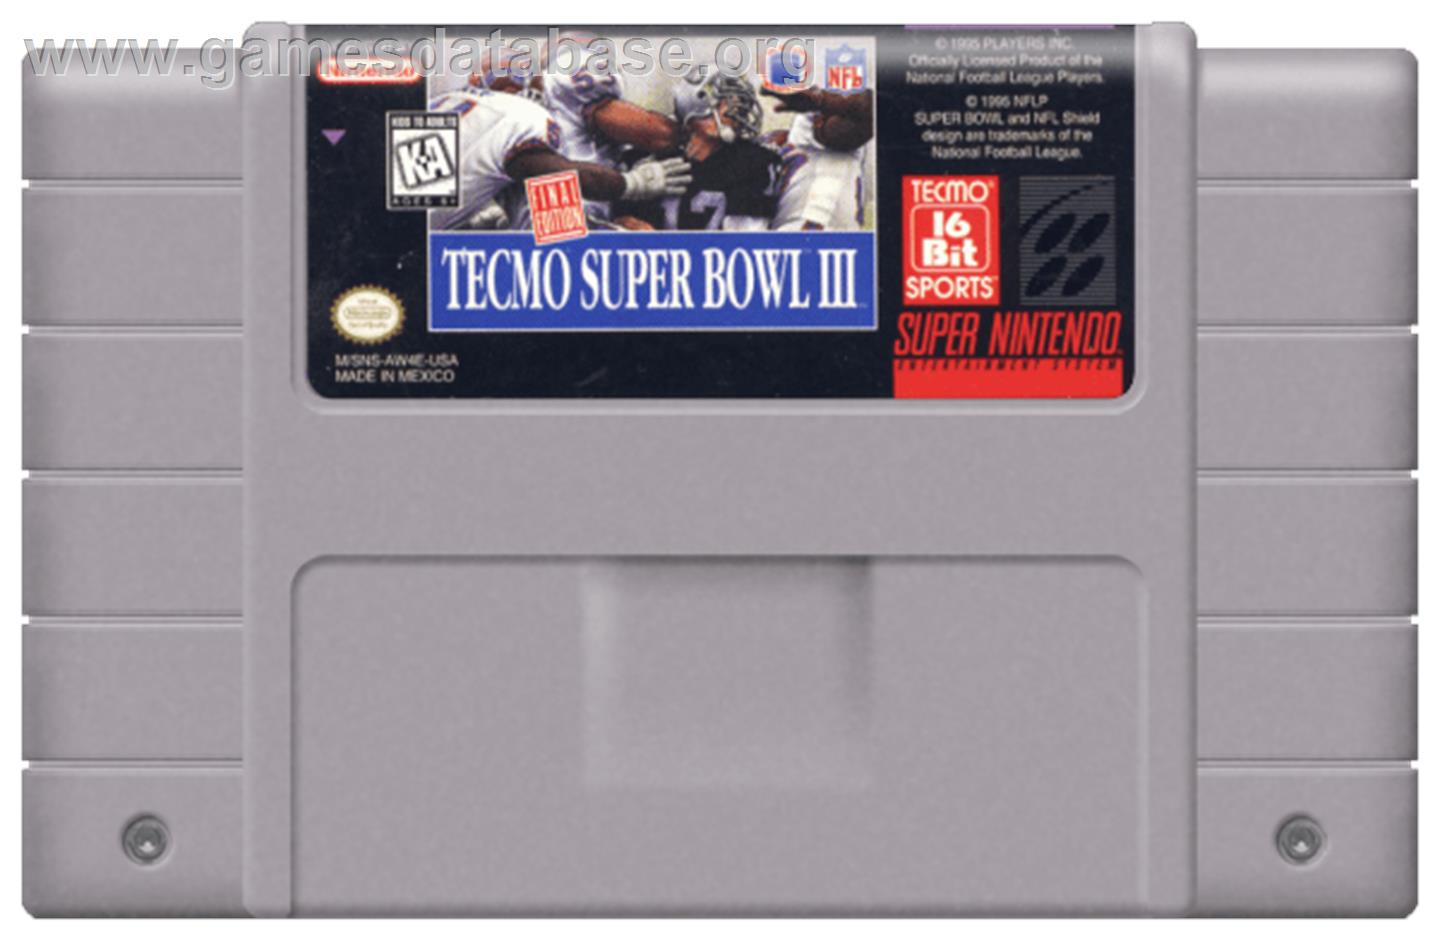 Tecmo Super Bowl III: Final Edition - Nintendo SNES - Artwork - Cartridge